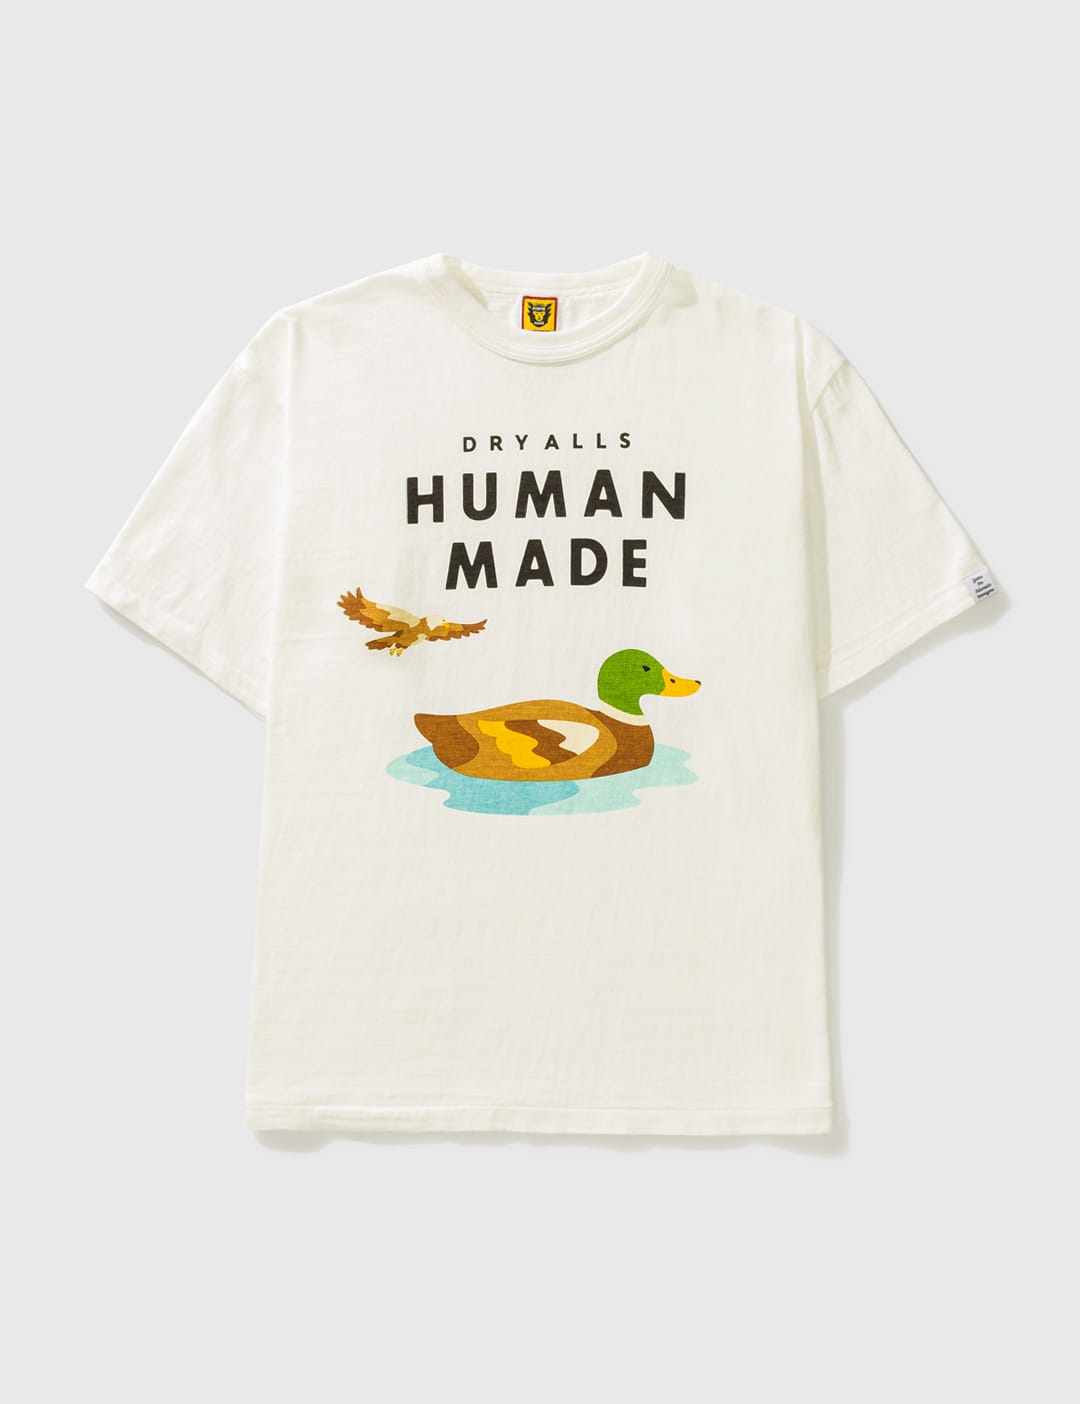 Human Made - HUMAN MADE Graphic T-shirt | HBX - Globally